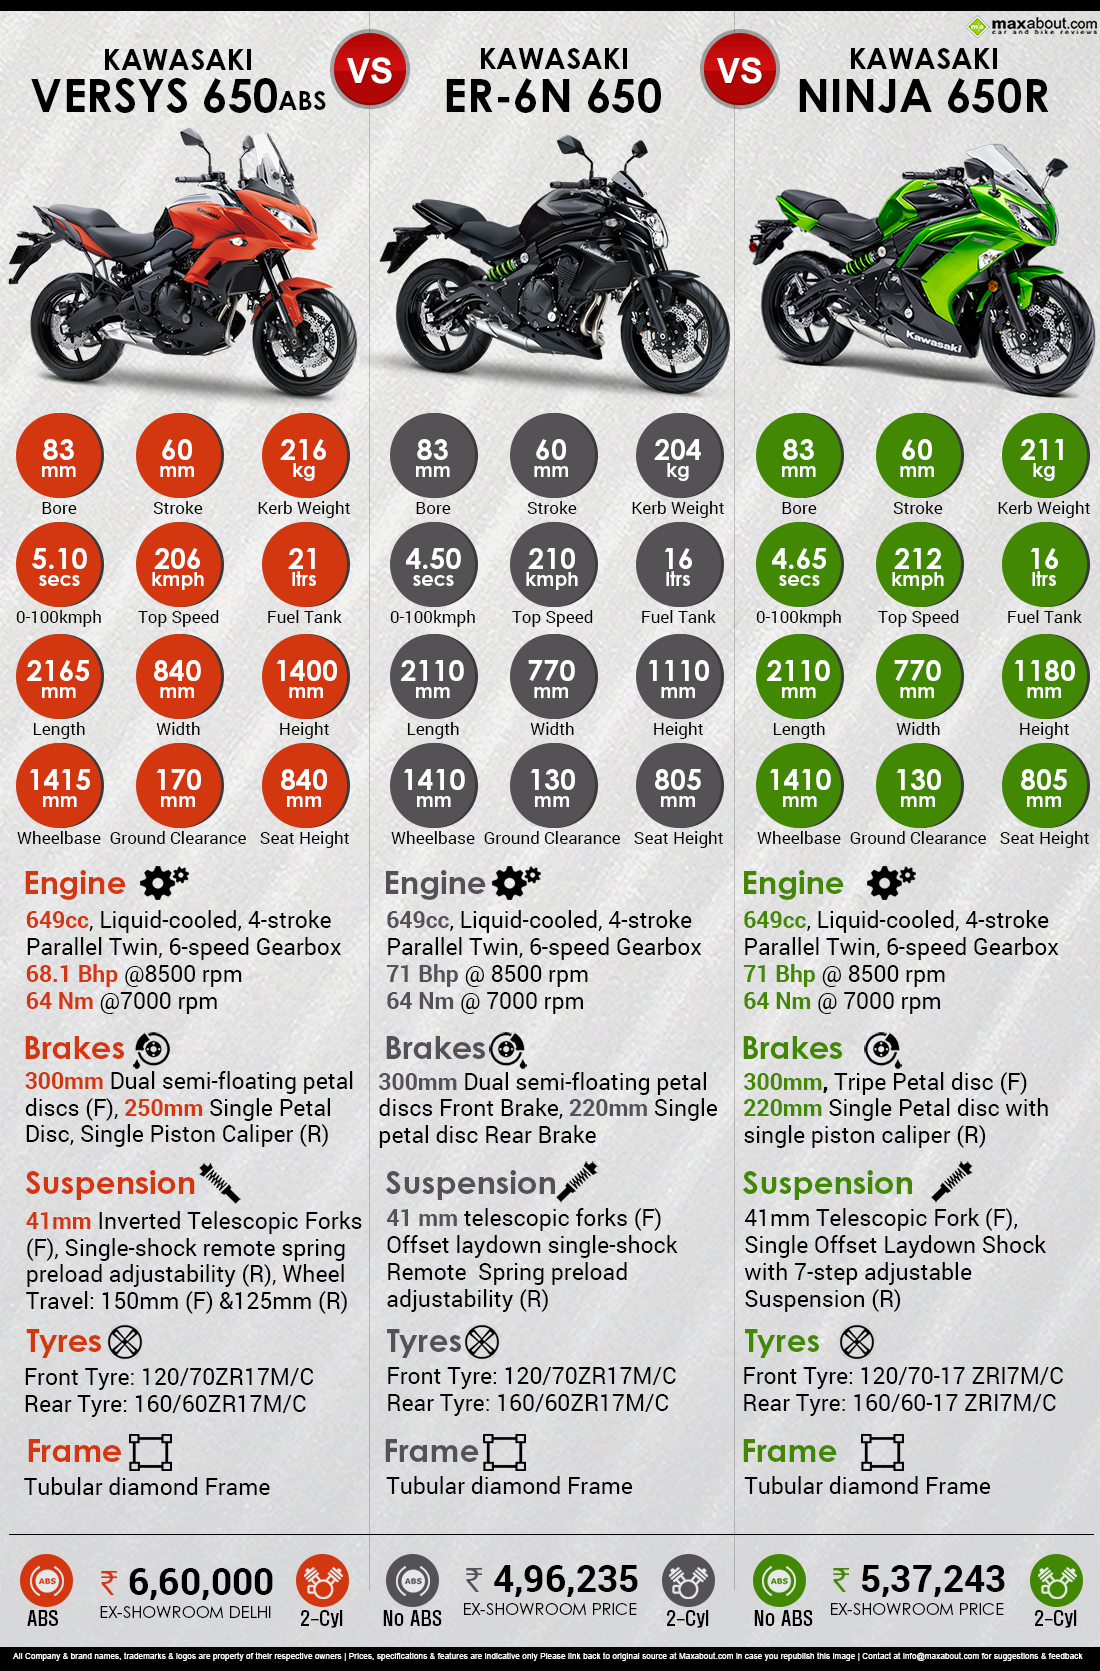 Quick Comparison 650cc Kawasaki Motorcycles: Versys vs. ER-6n vs. Ninja